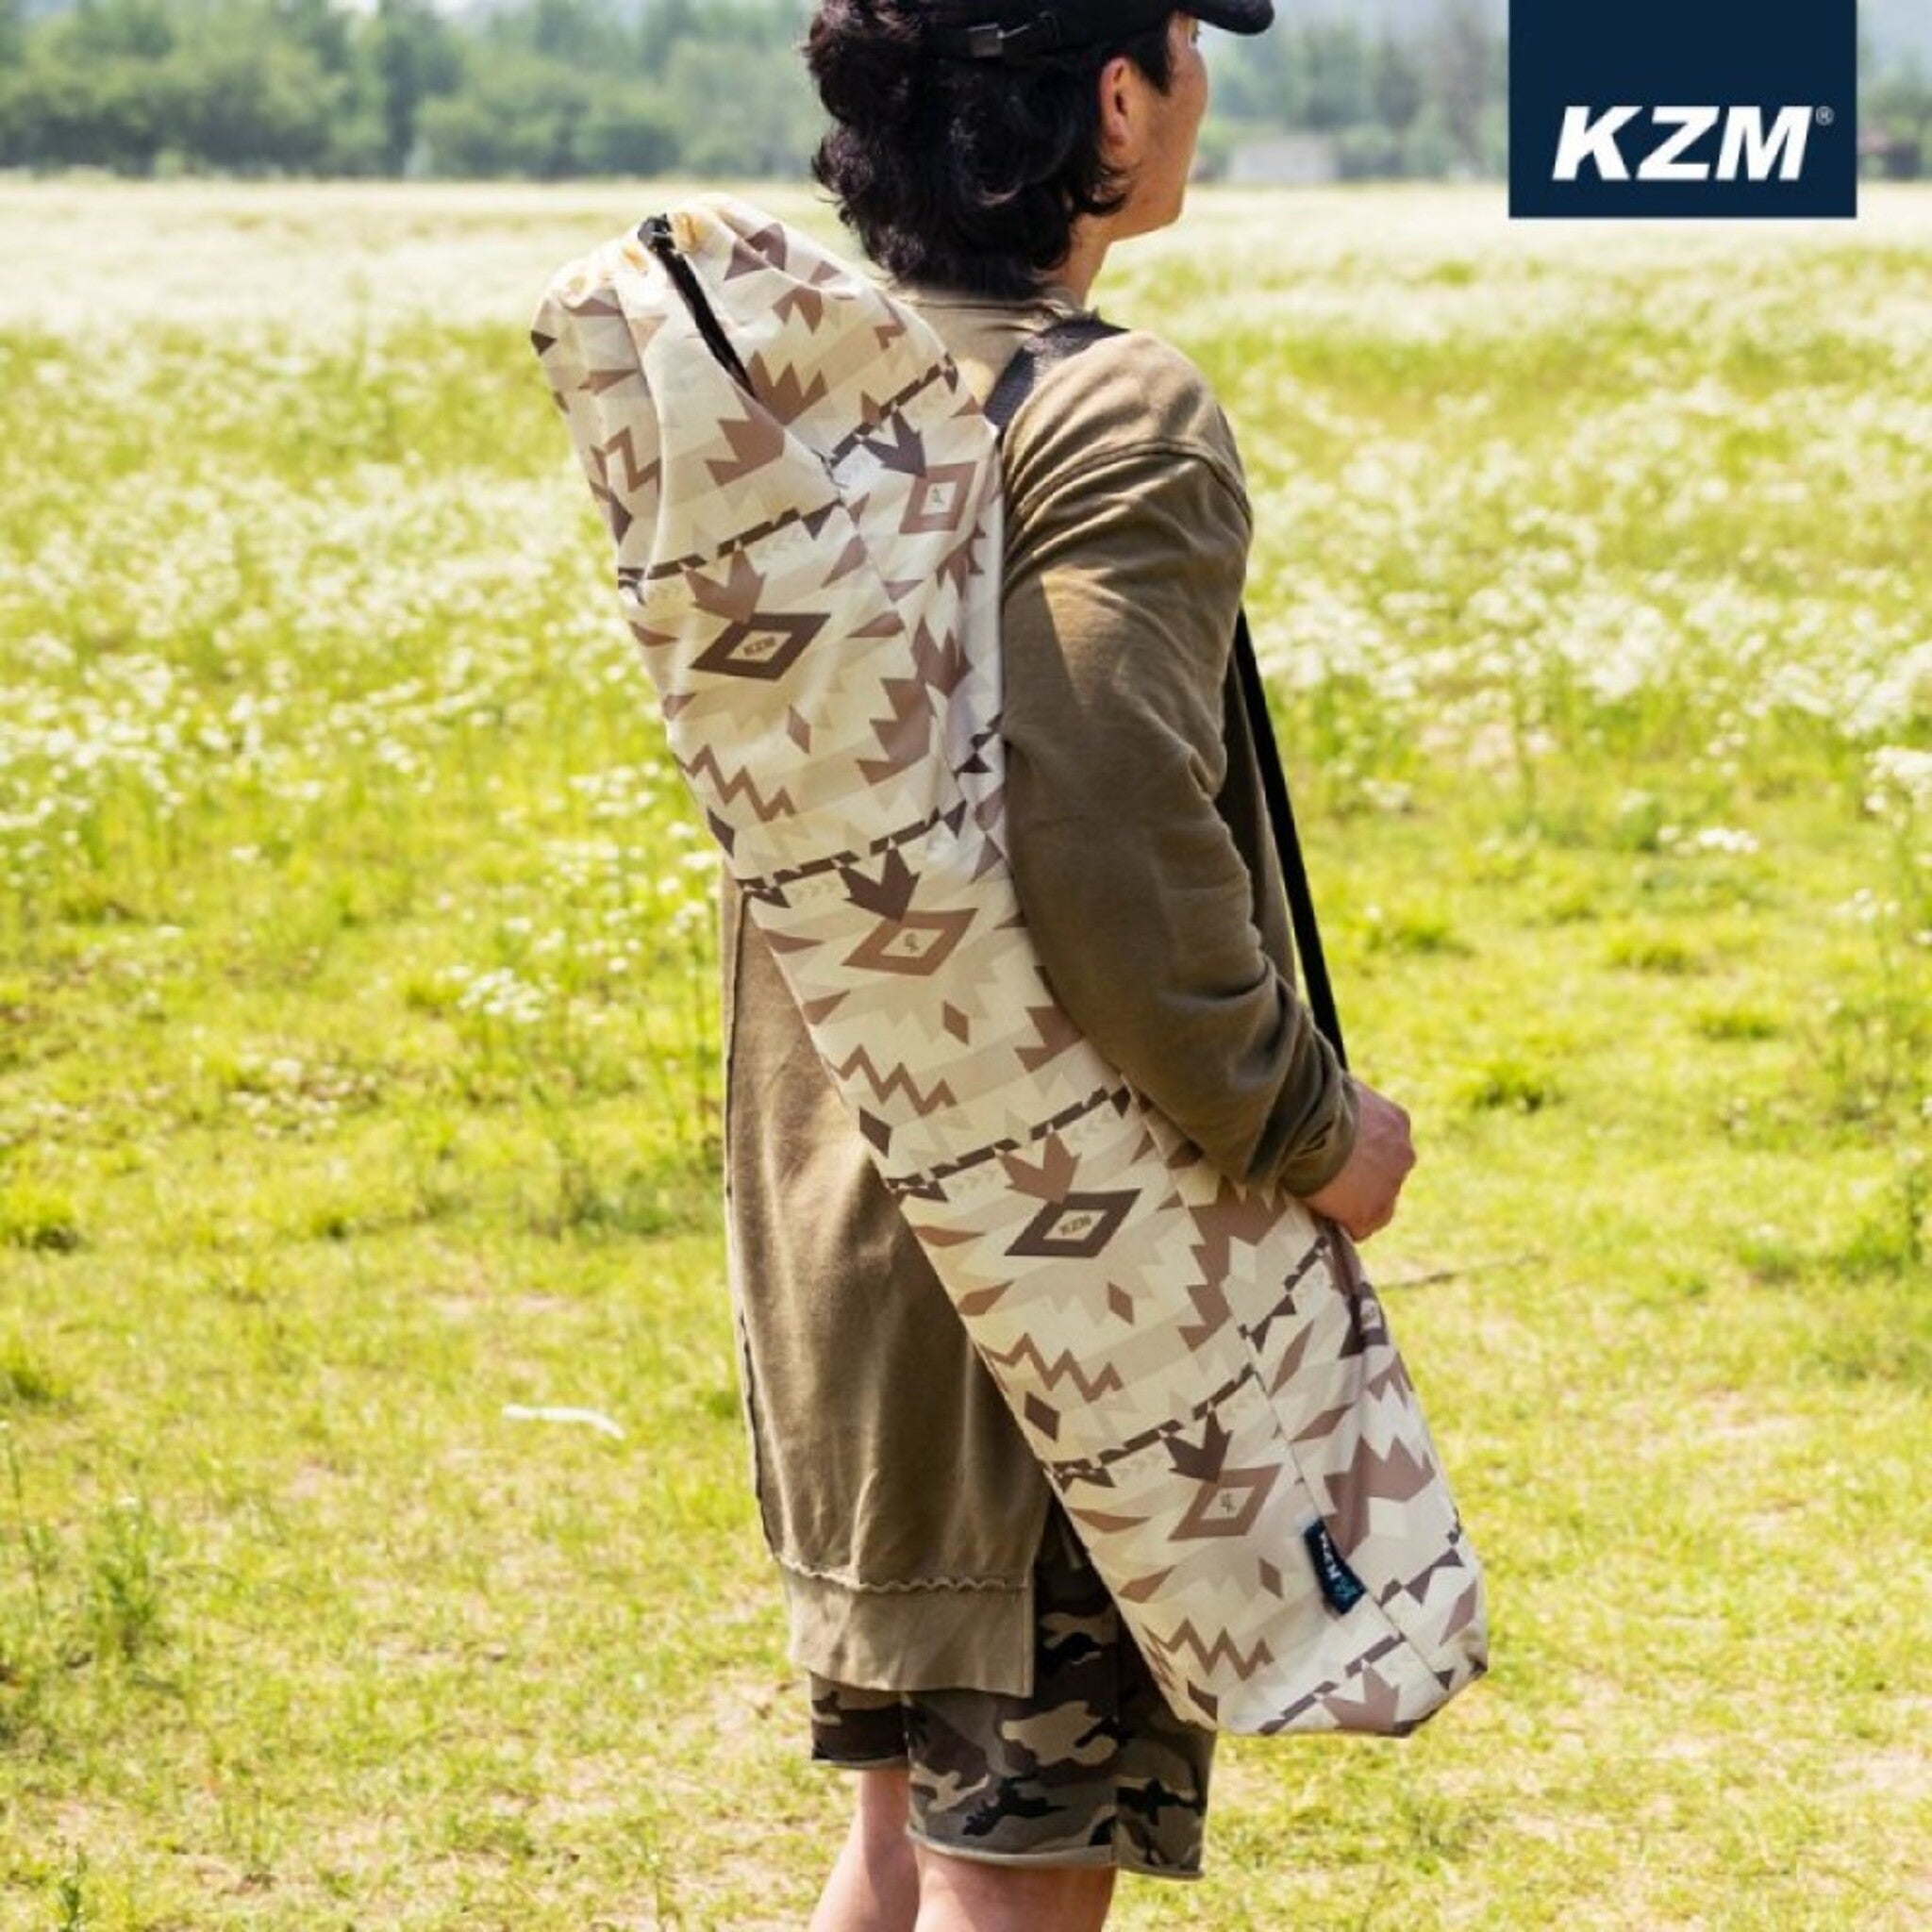 KZM 軍事風高承重行軍床 標準版 K20T1C024